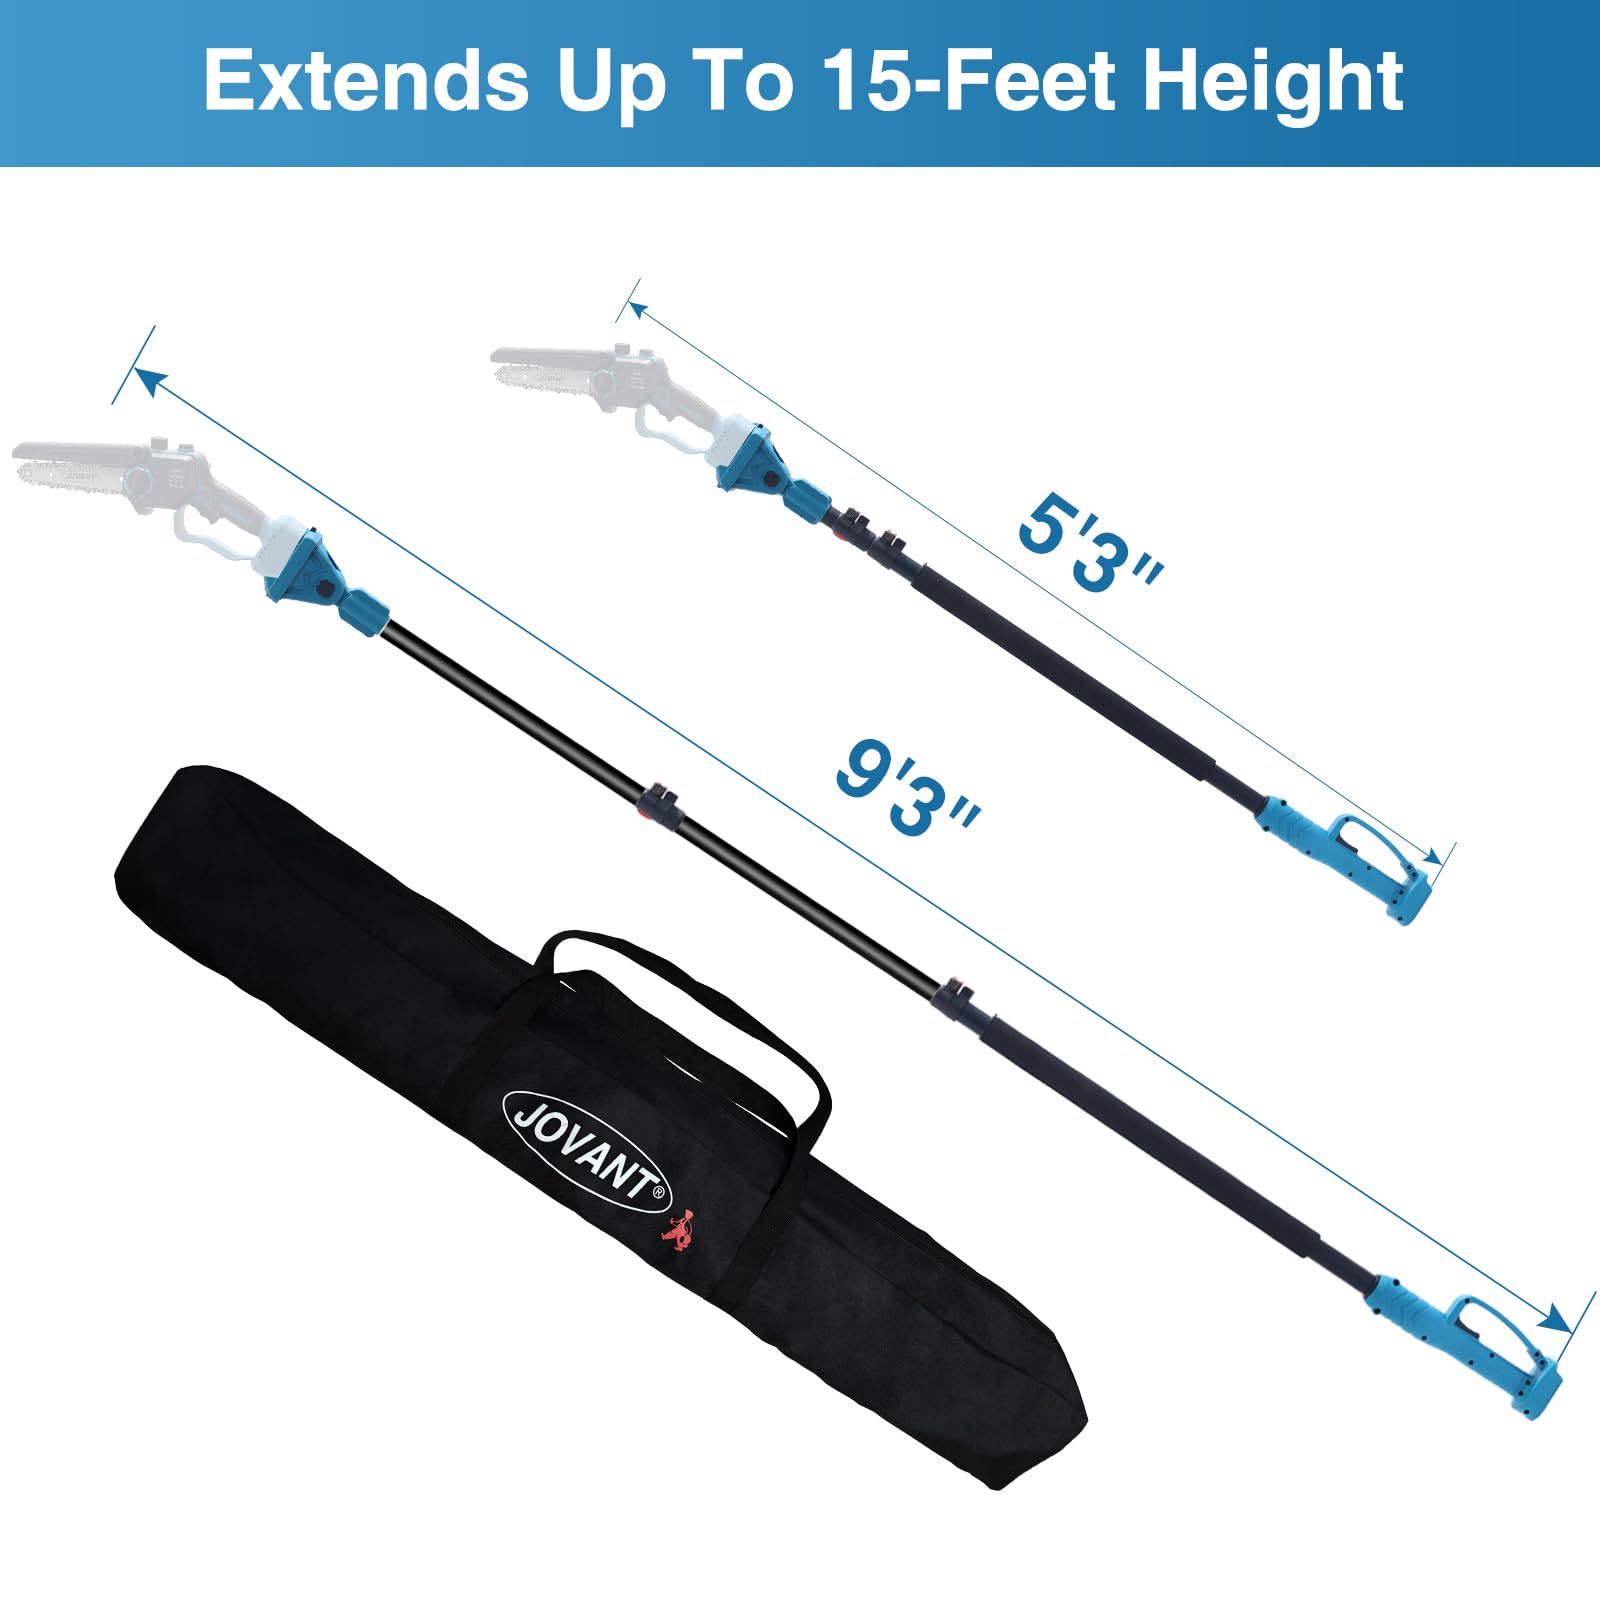 Extends Up To 15-Feet Height Reach Pole Length: 5'3" - 9'3"